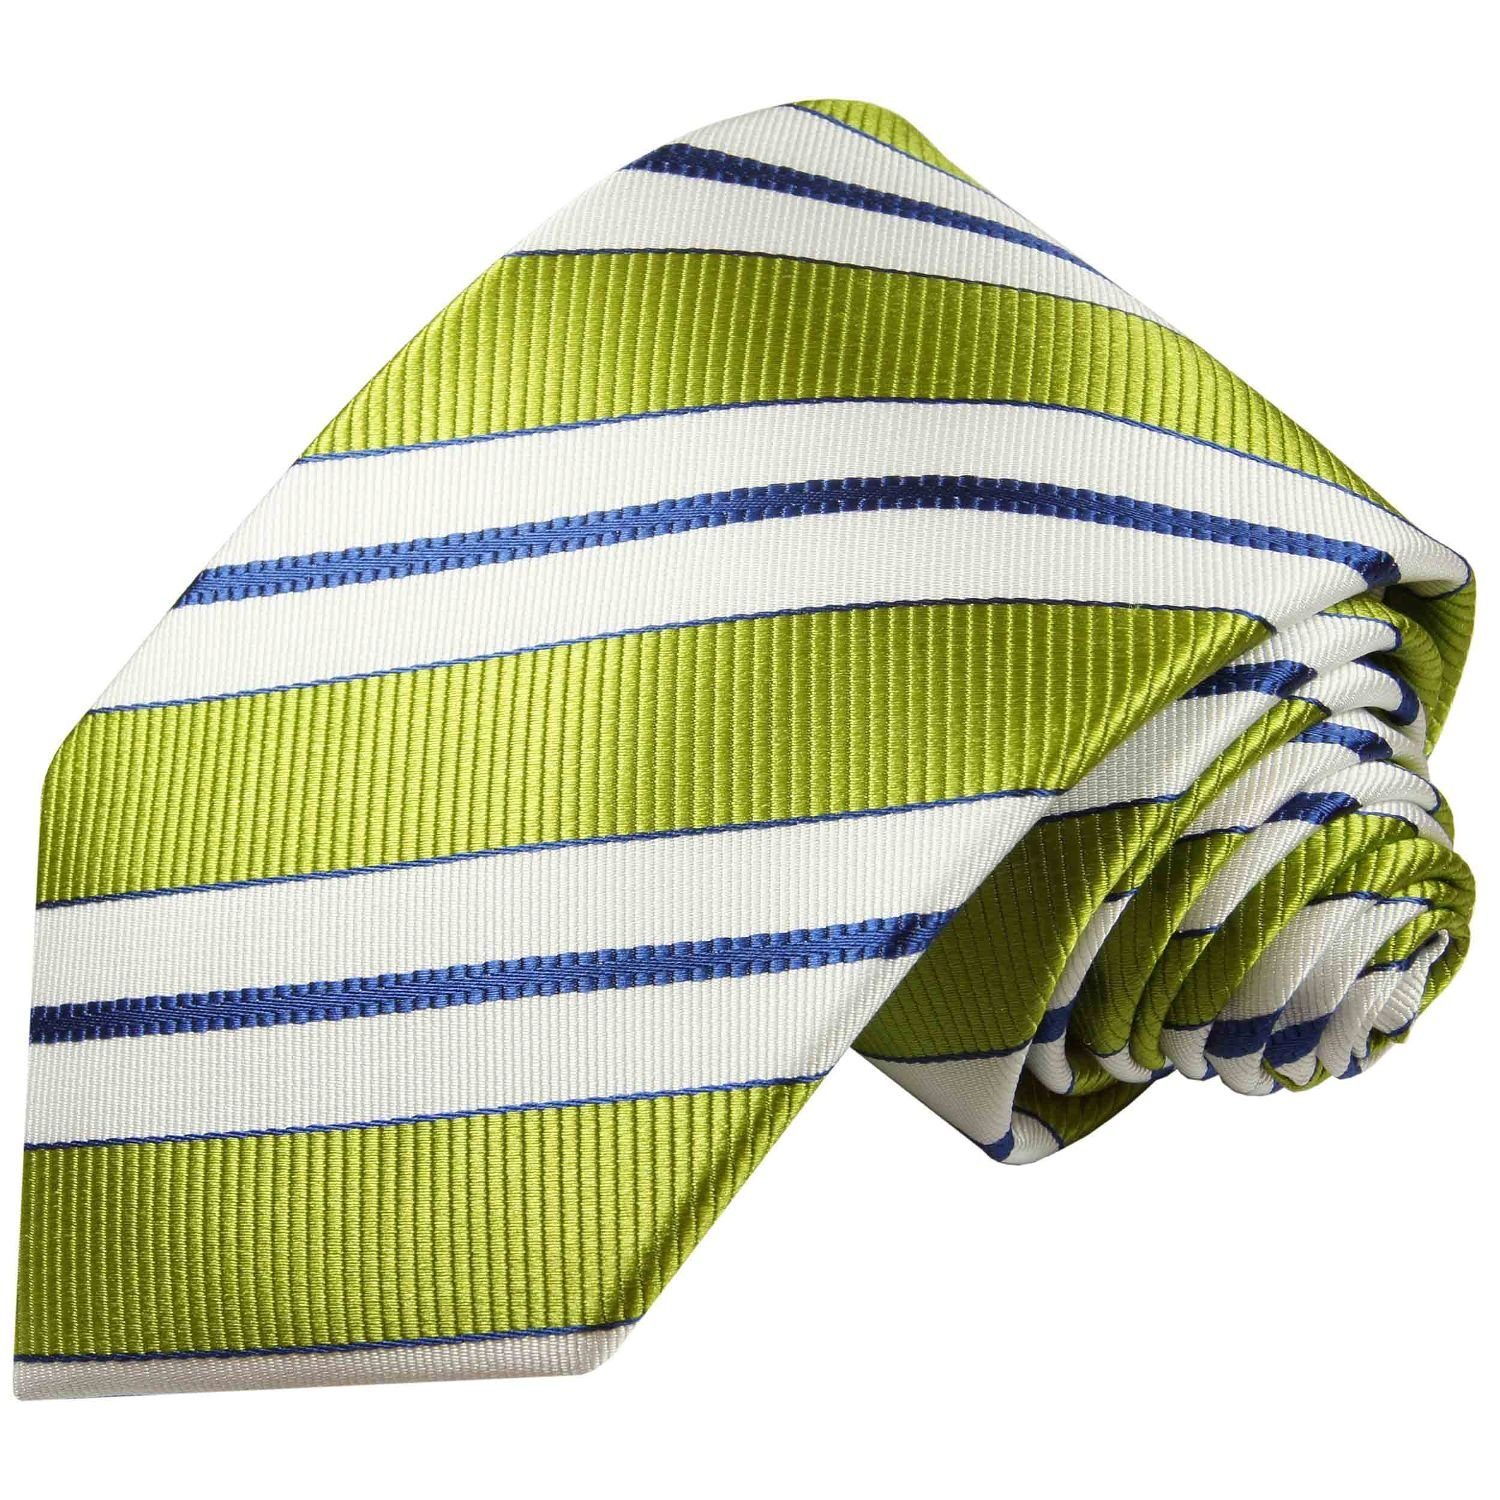 Paul Malone Krawatte Herren Seidenkrawatte Schlips modern gestreift 100% Seide Breit (8cm), Extra lang (165cm), grün 103 | Breite Krawatten